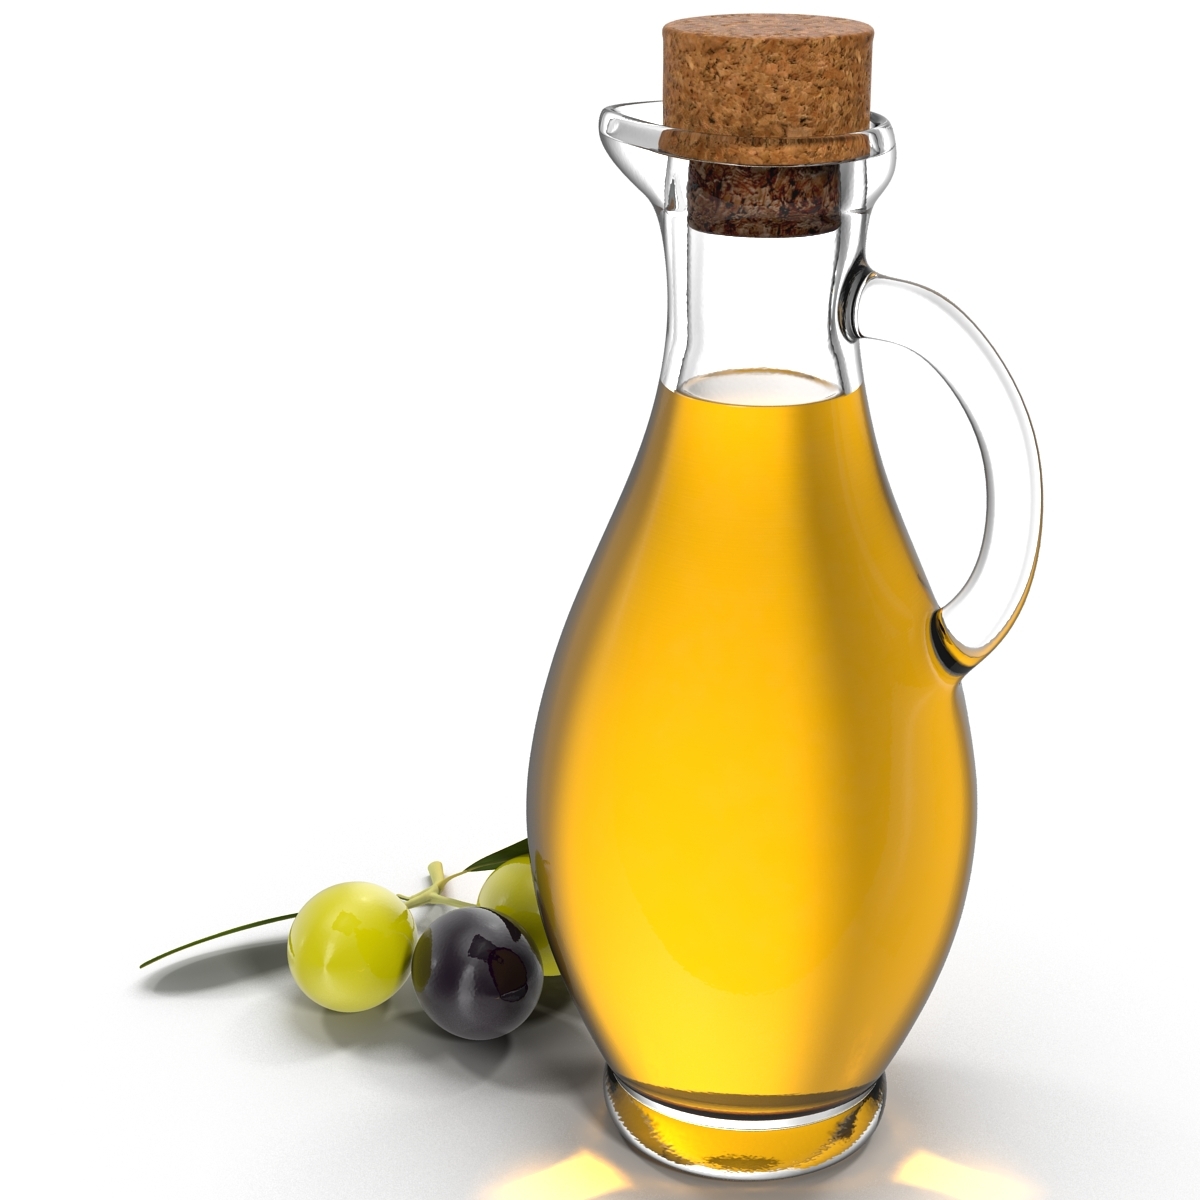 Olive oil bottles uk